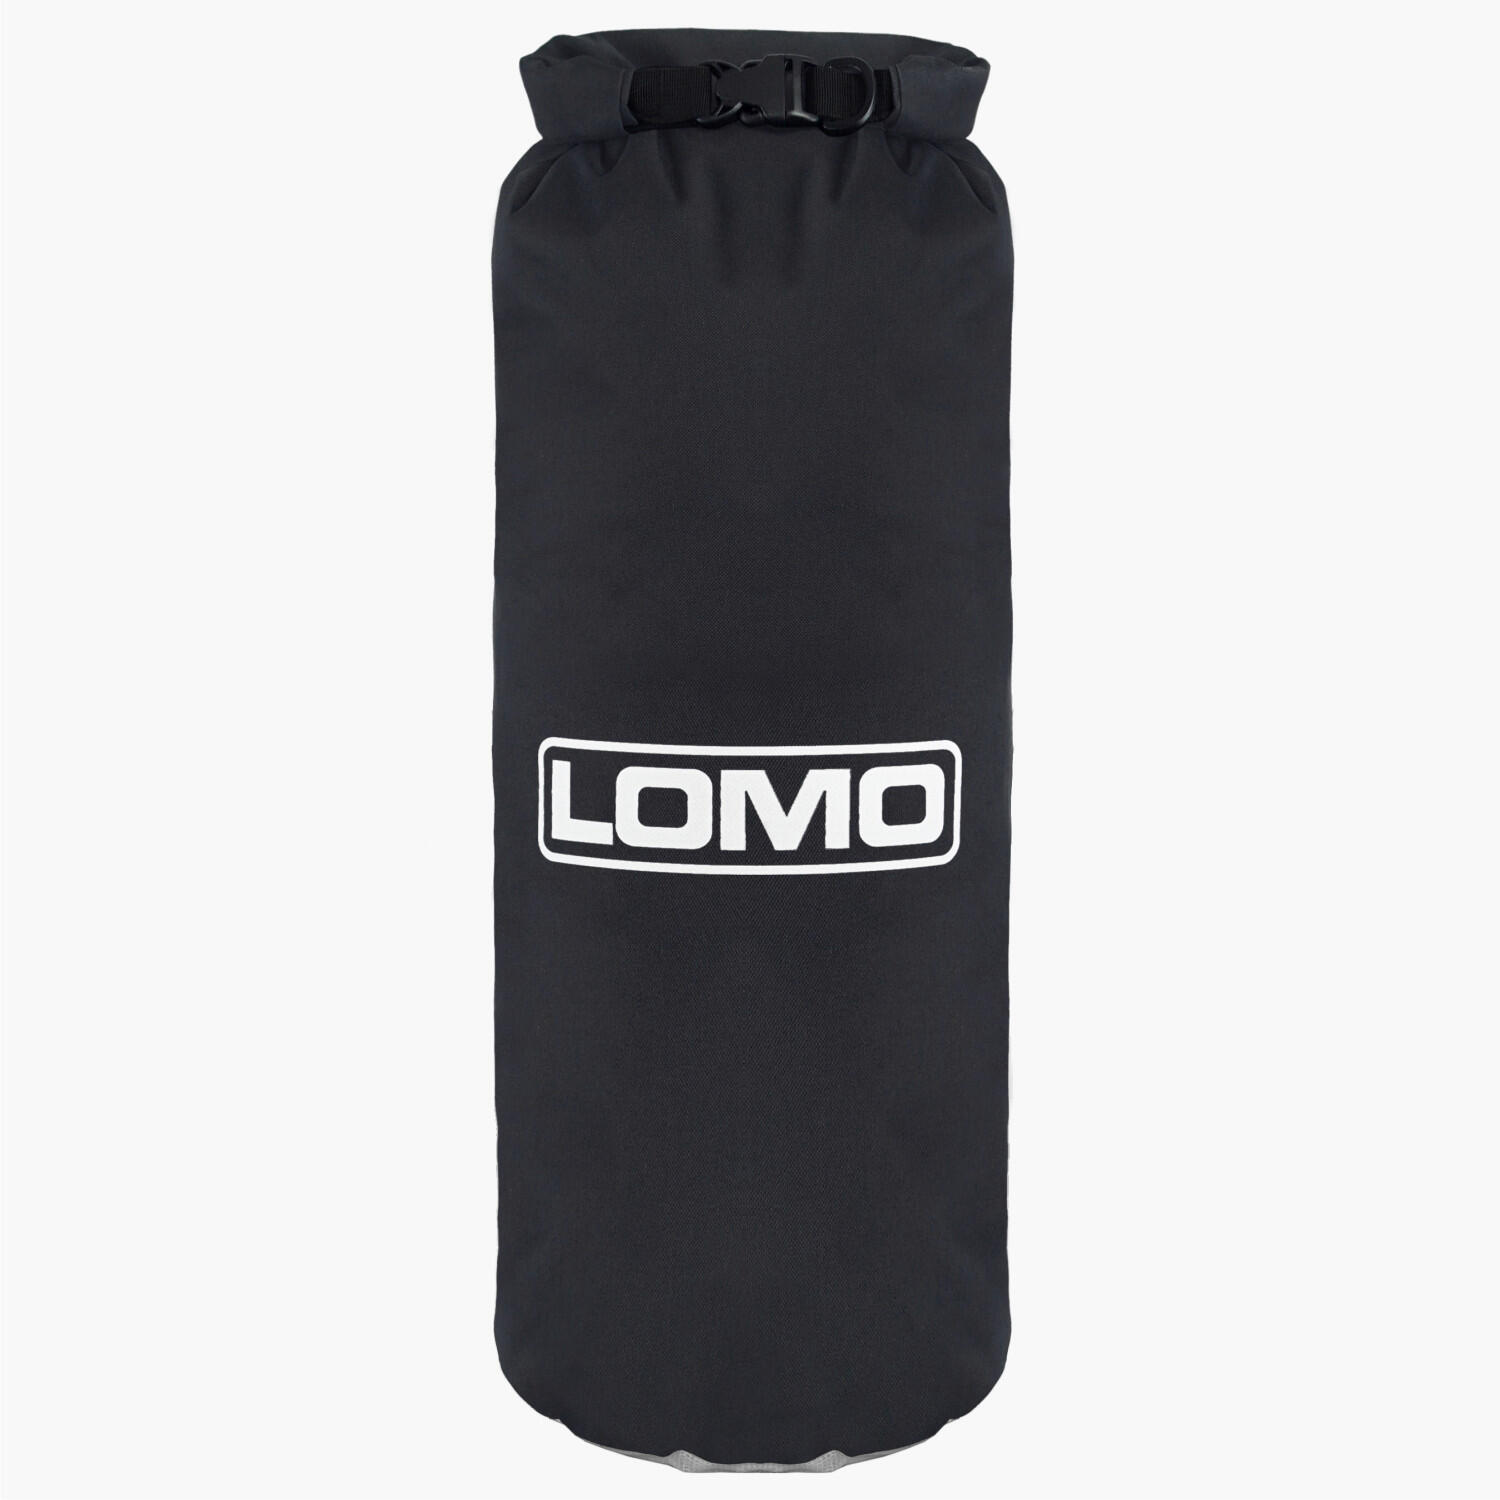 Lomo 40L Dry Bag - Black with Window 4/7